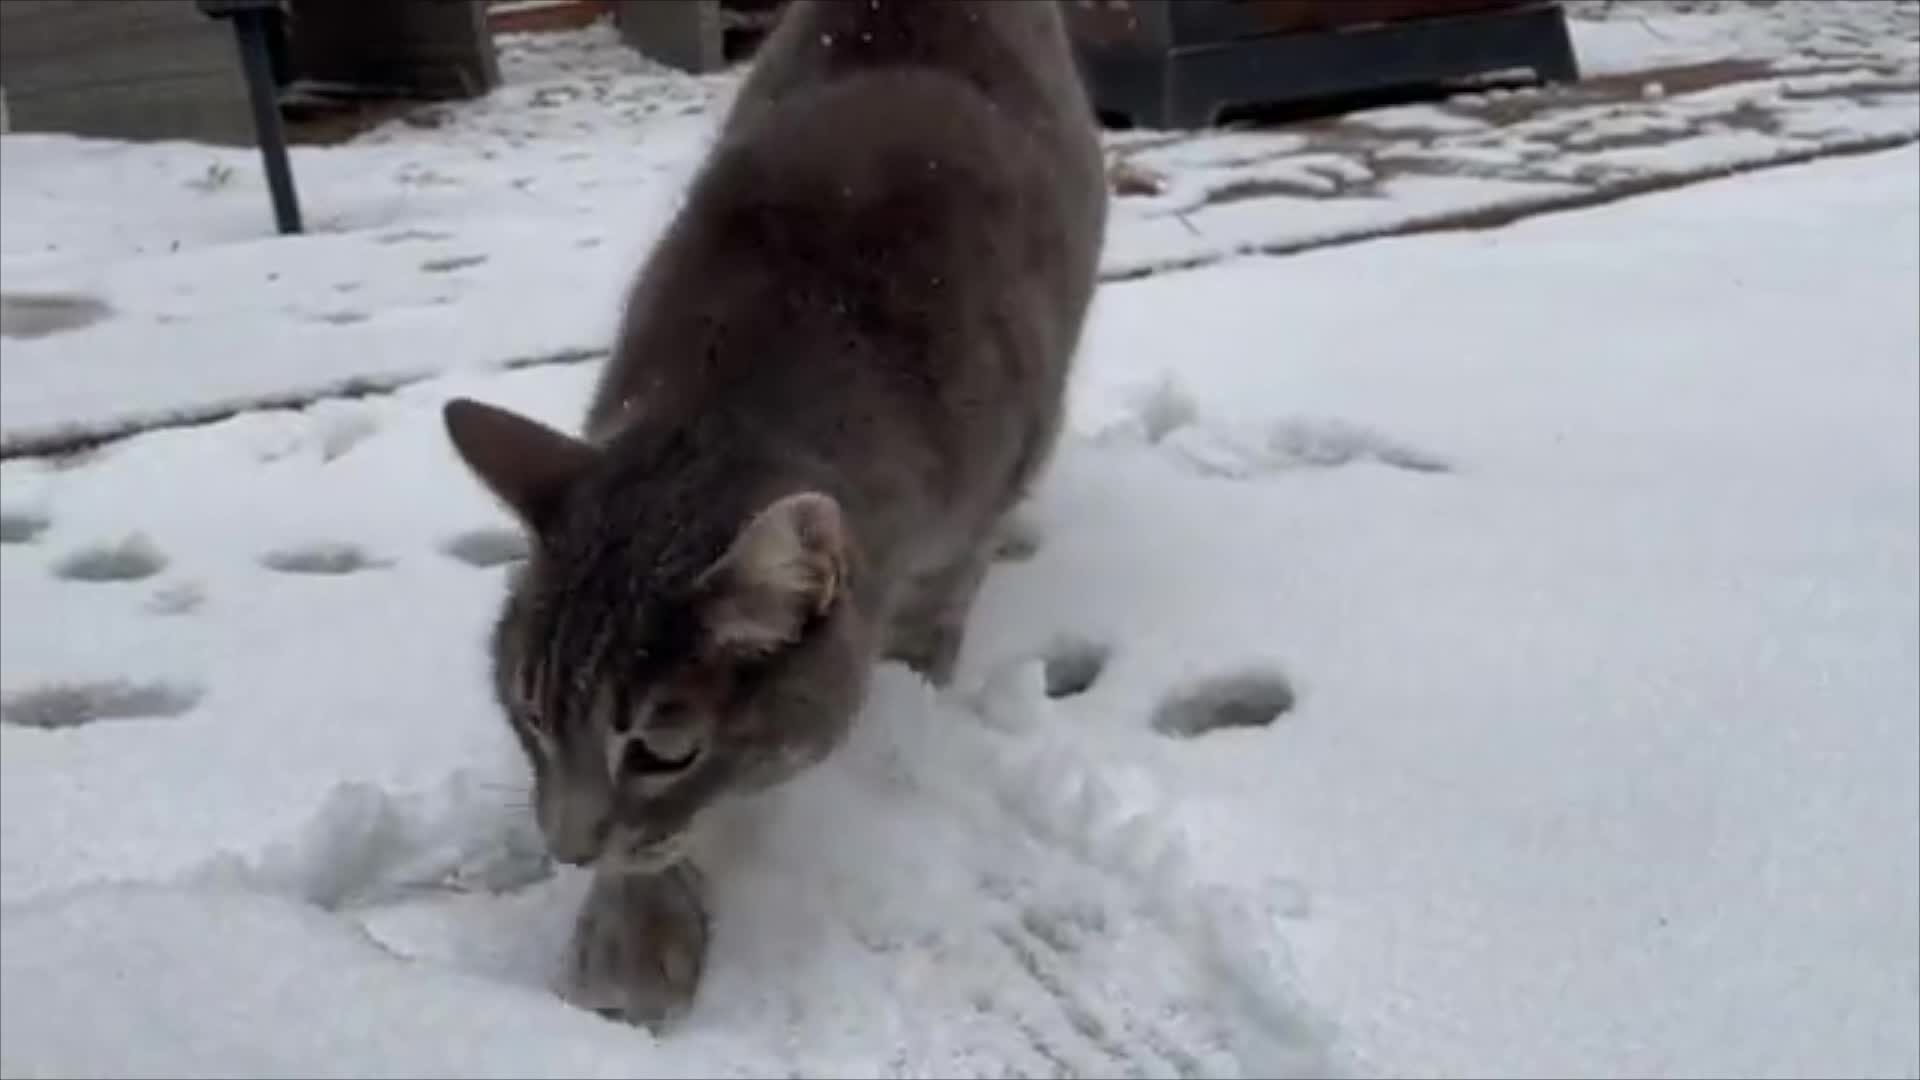 A cat investigated fresh snowfall in Flagstaff, Arizona, on October 12.